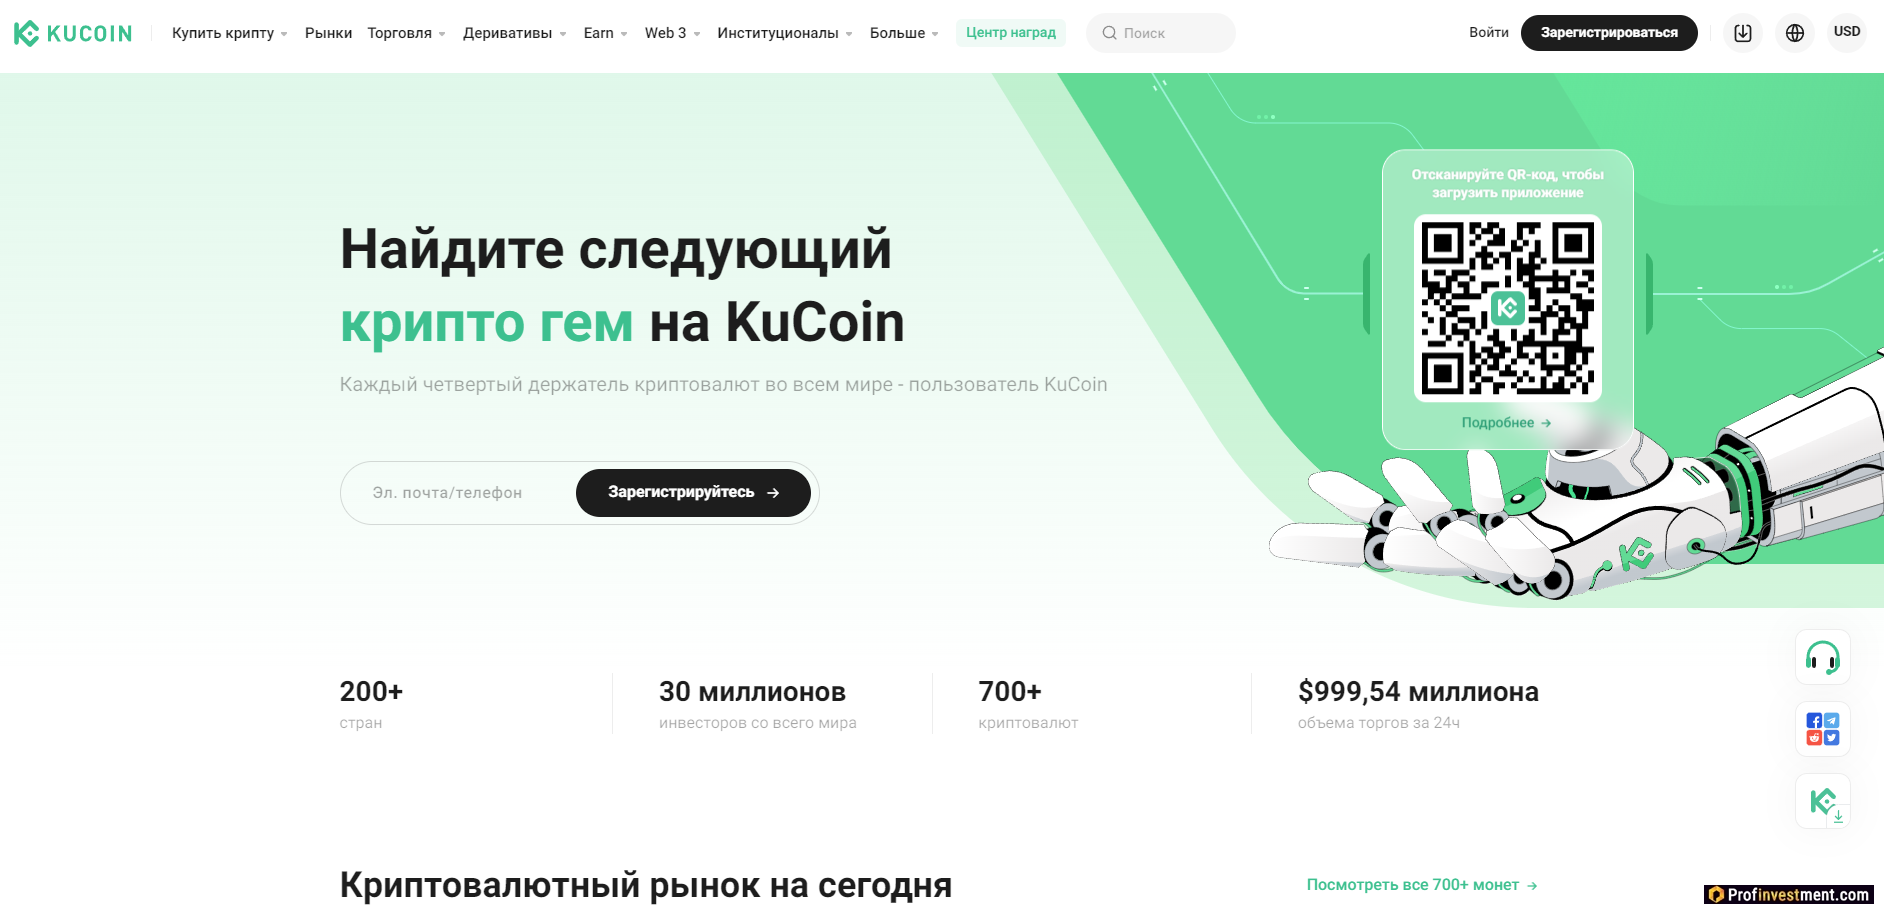 Биржа KuCoin (web3 сервисы)